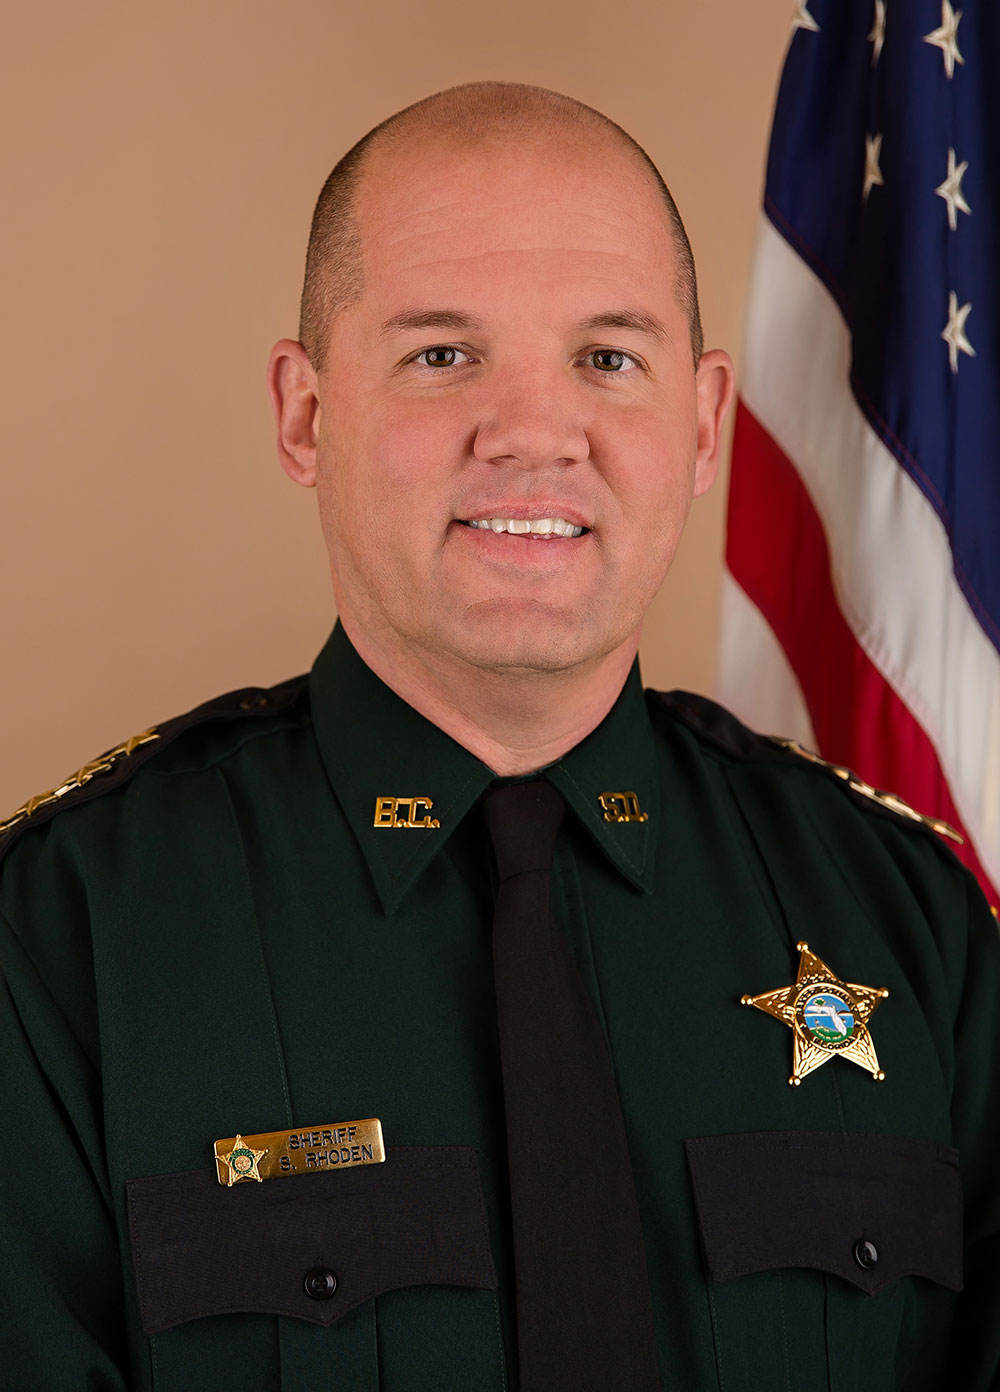 Photo of Baker County Sheriff Scotty Rhoden